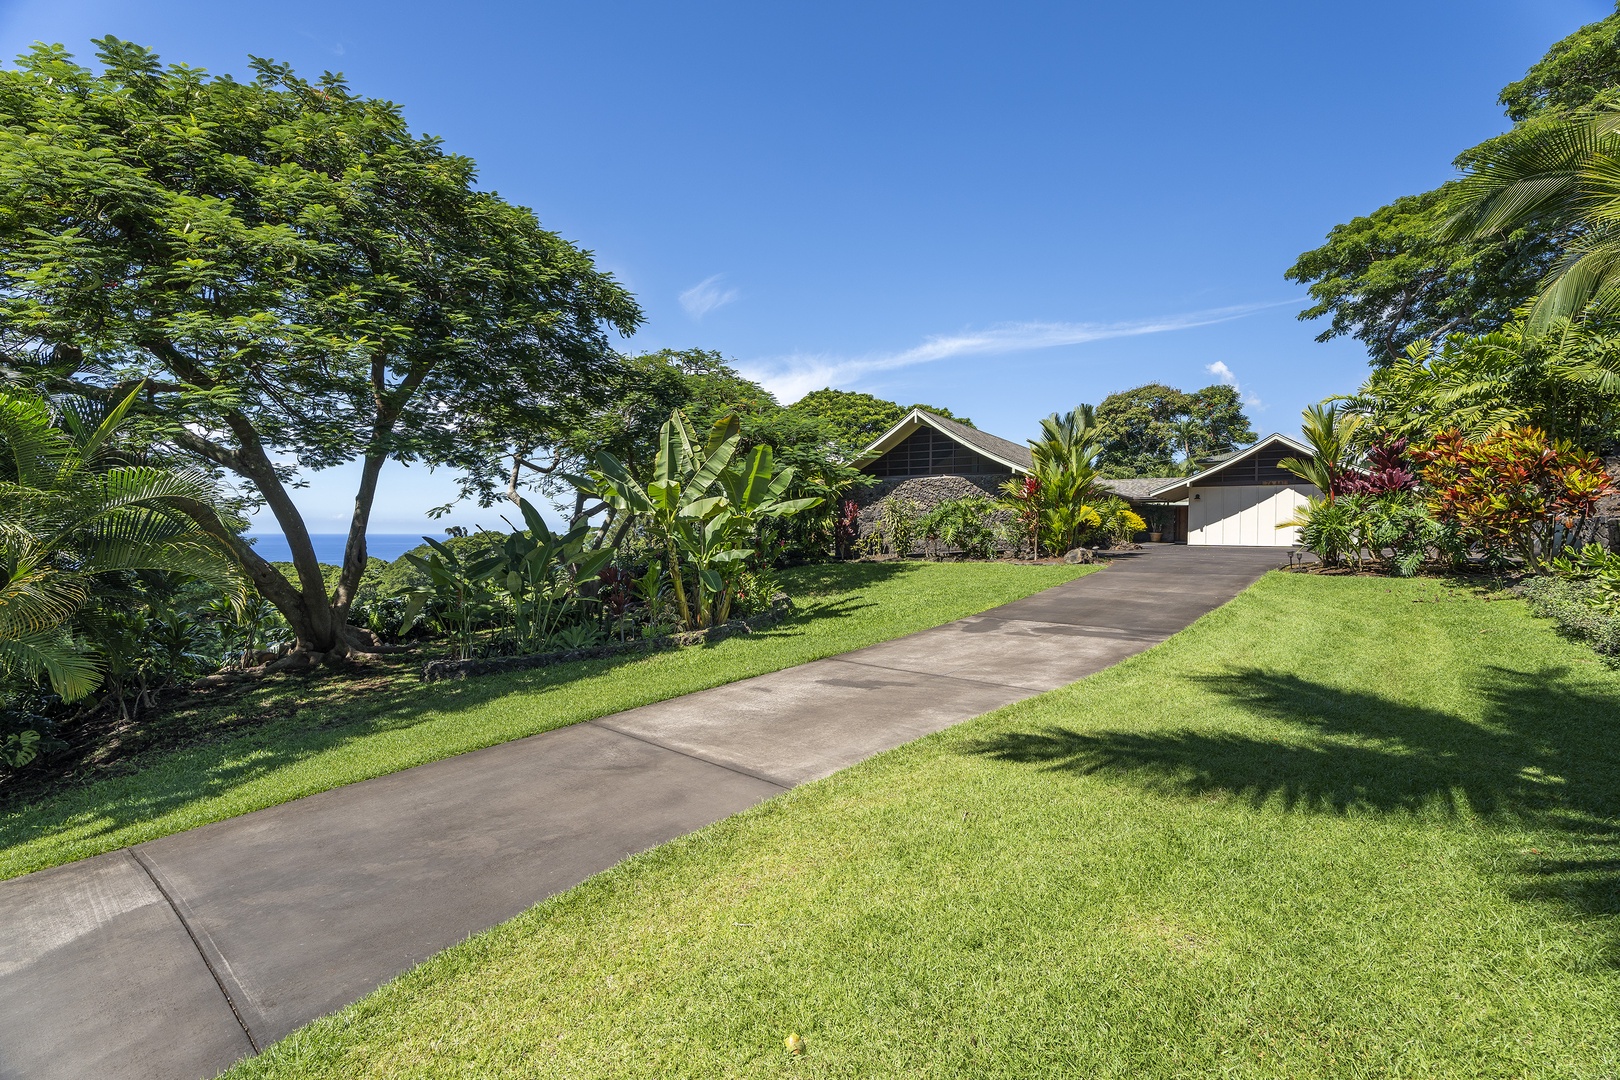 Kailua-Kona Vacation Rentals, Hale Joli - Front of the house